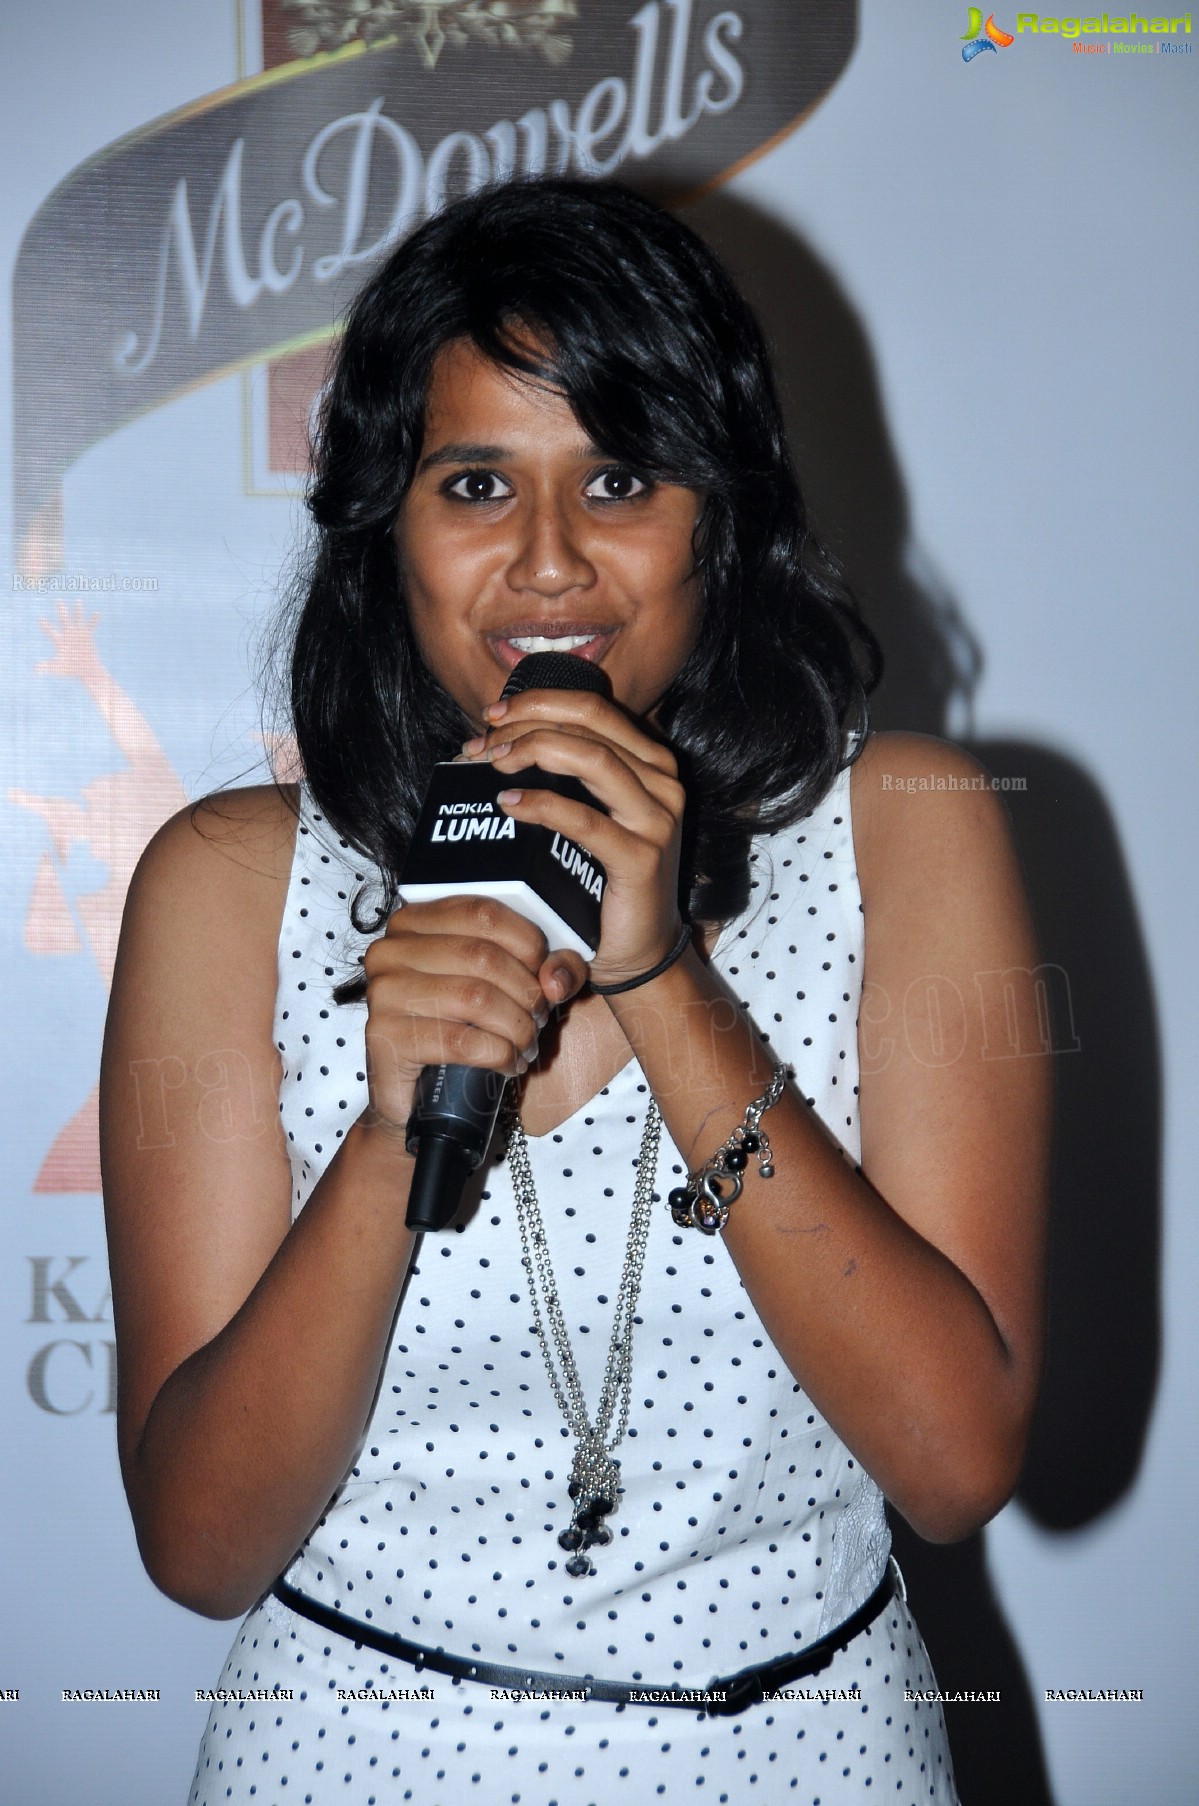 Karaoke World Championship at 10D, Hyderabad